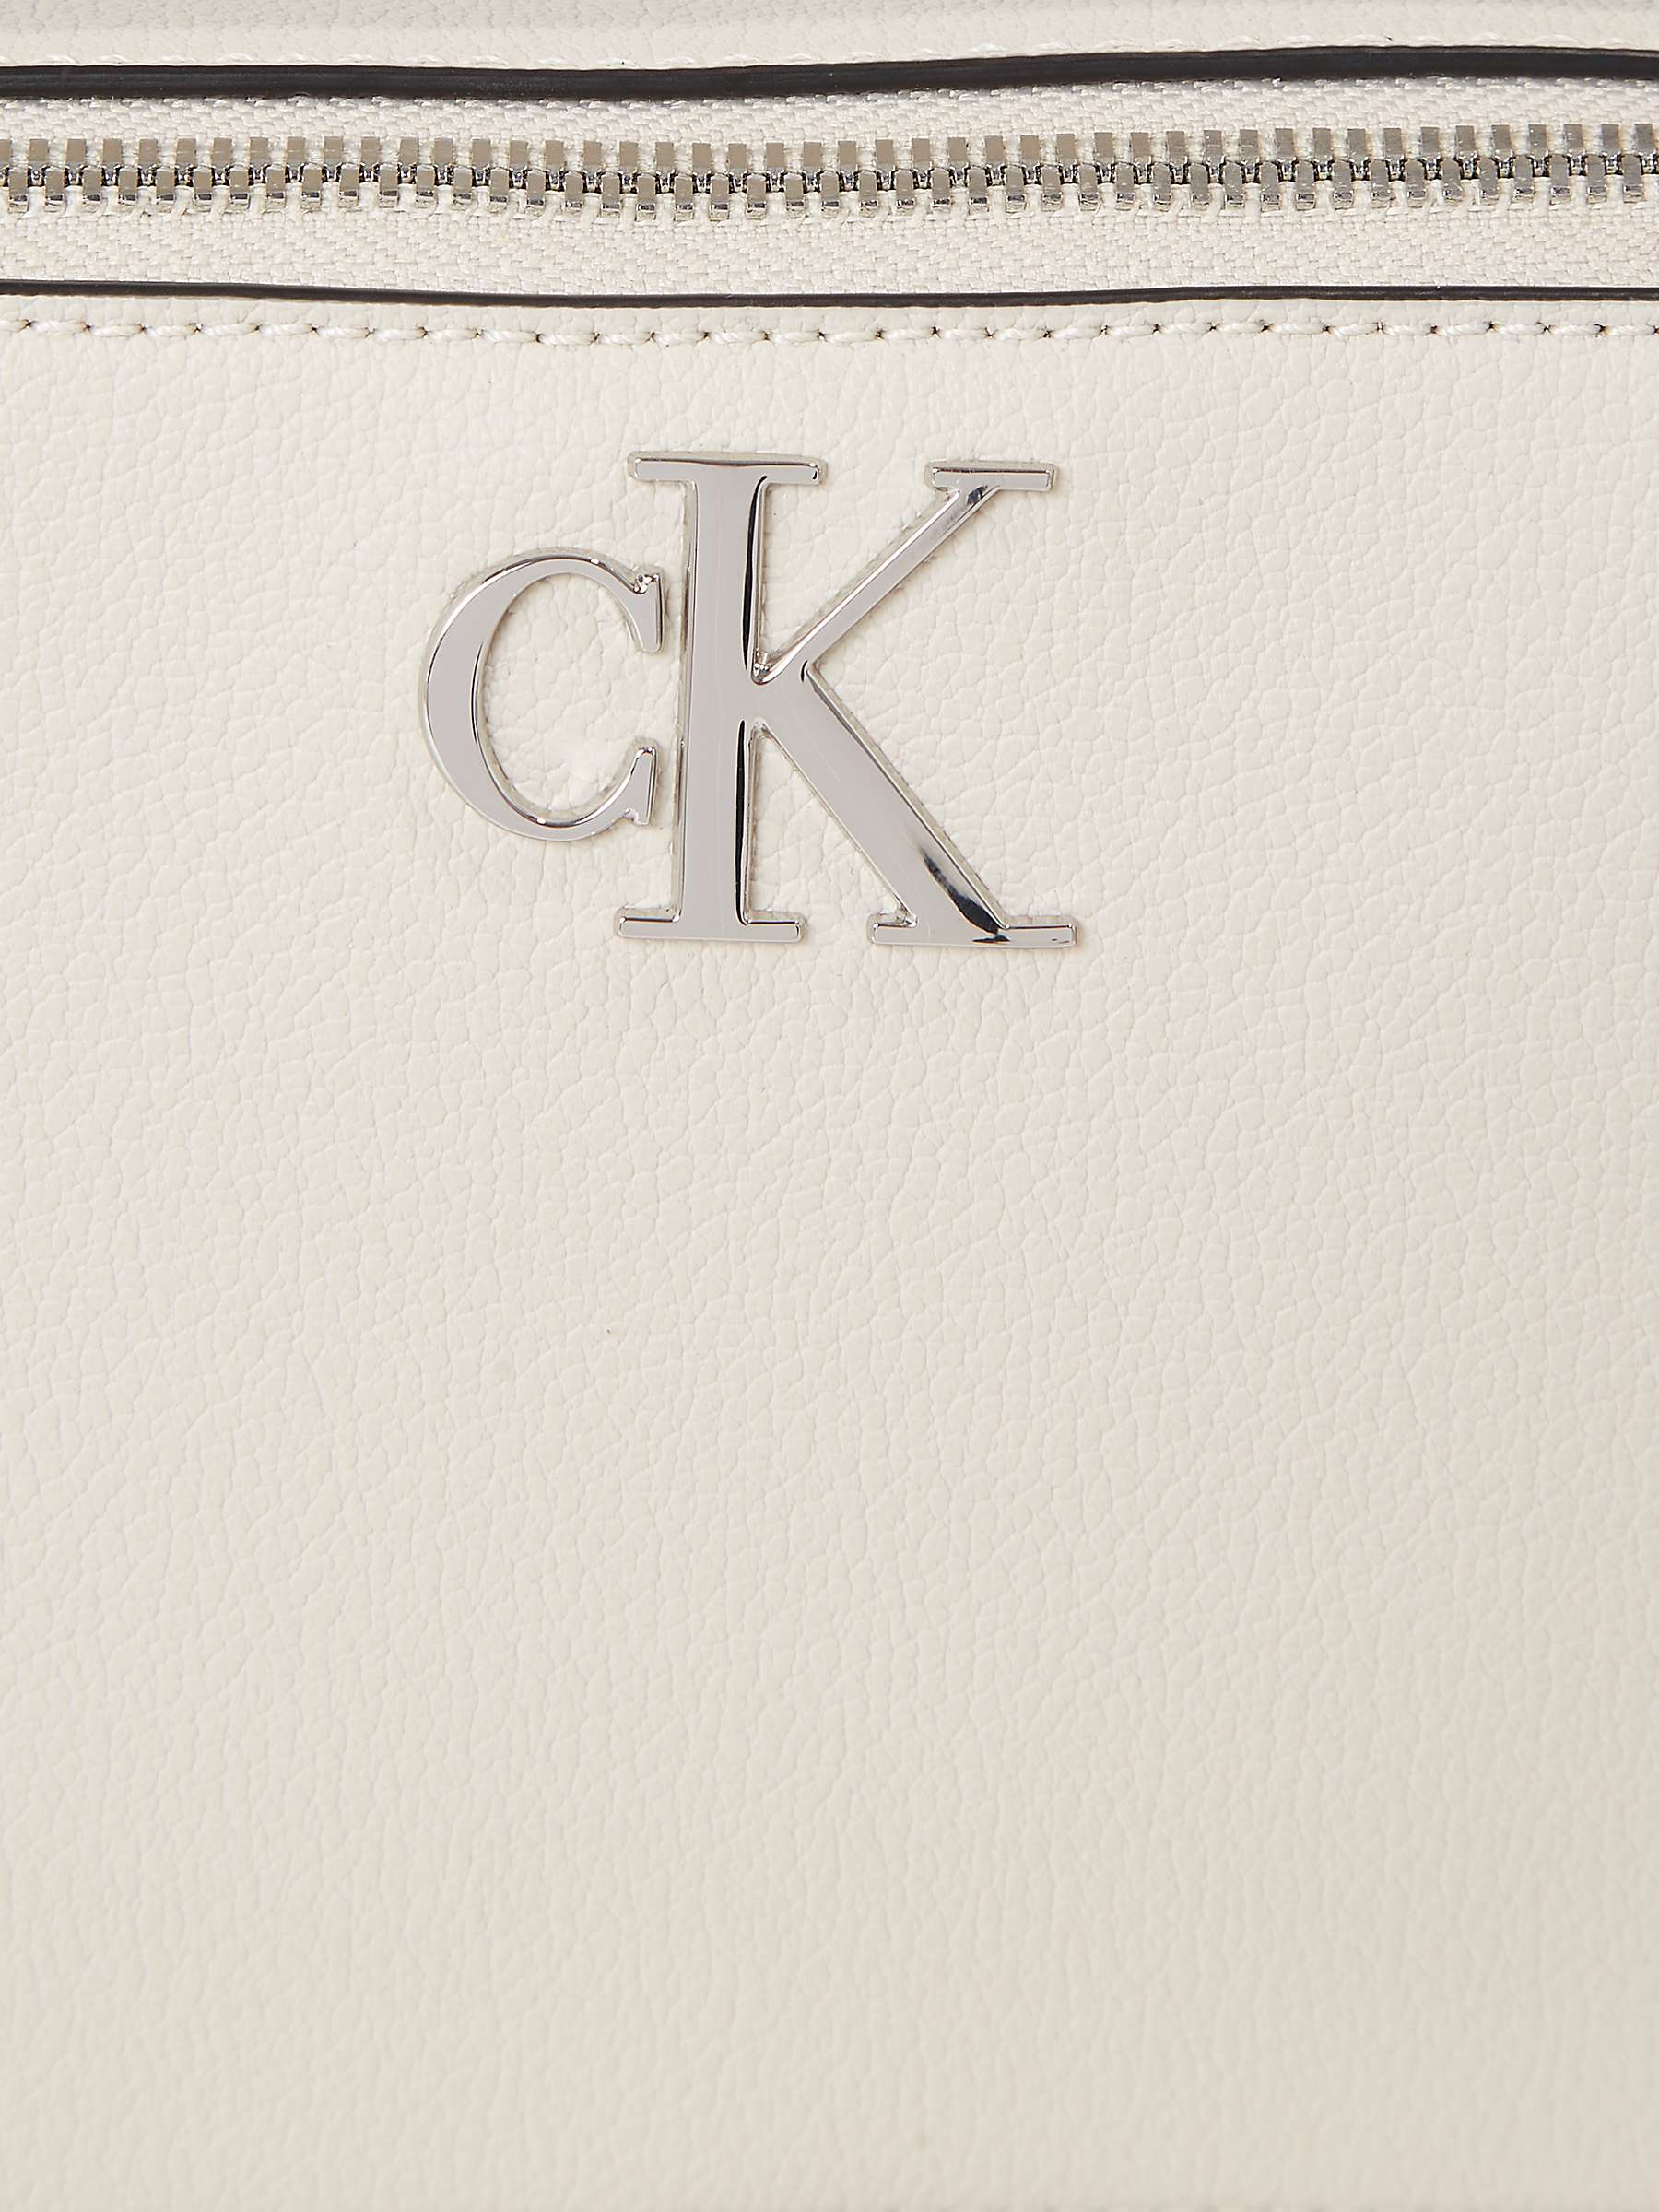 Buy Calvin Klein Minimal Monogram Camera Bag Online at johnlewis.com